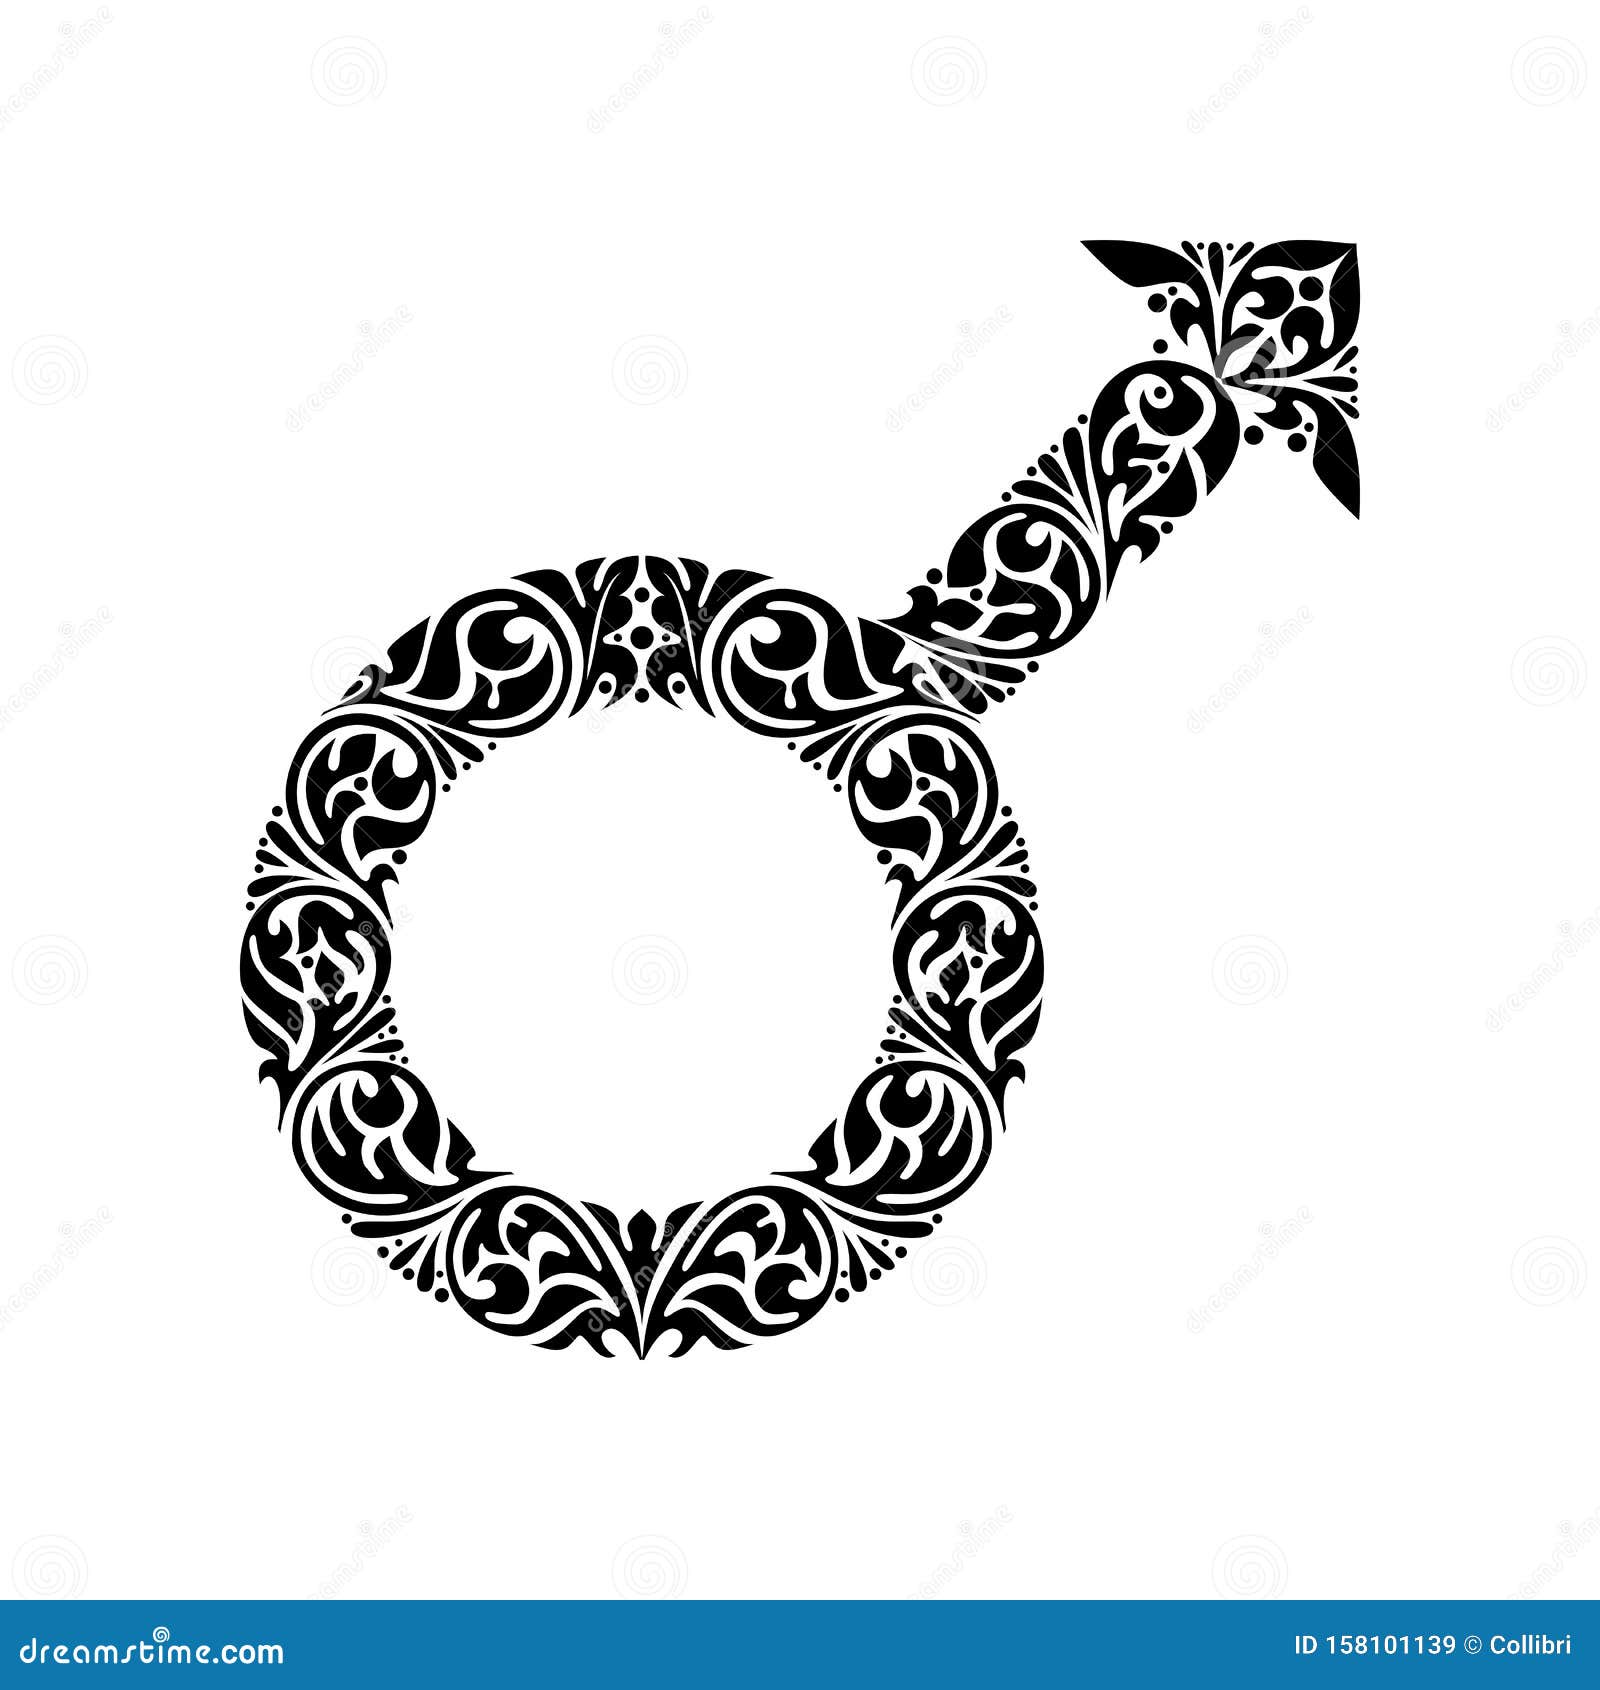 Gender Male Ornate Symbol. Hand Drawn Male Sign with Floral Ornaent Stock Vector - Illustration of ornate, emblem: 158101139